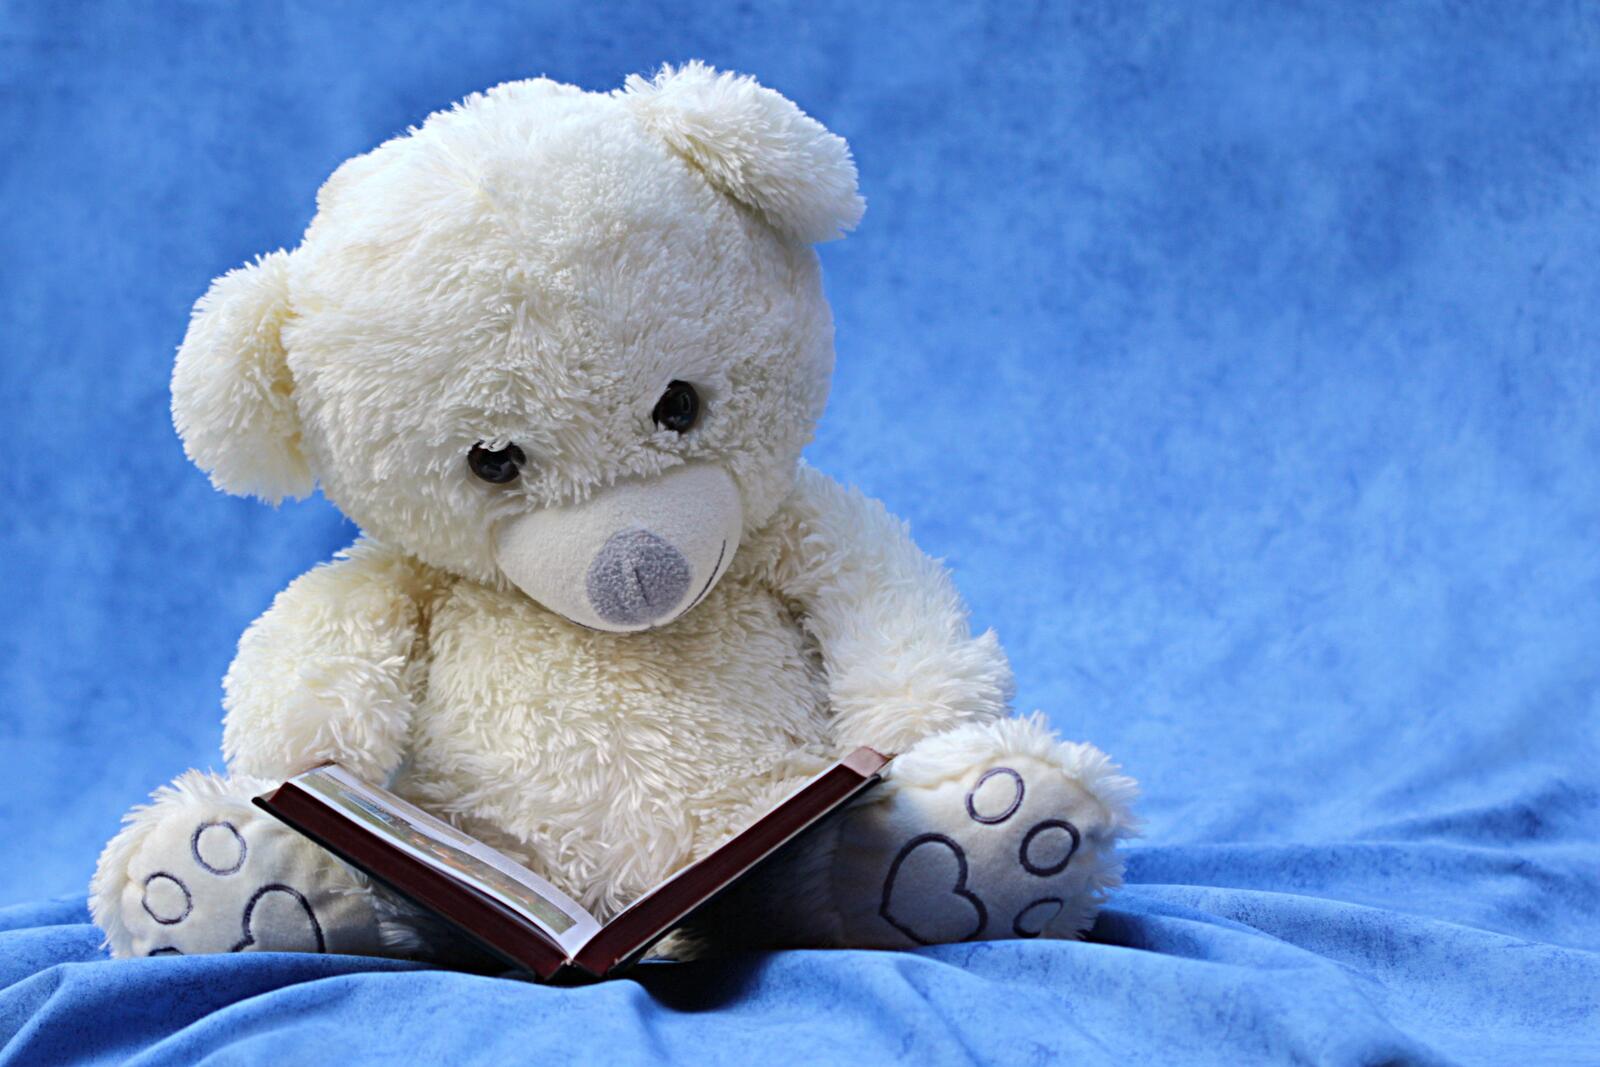 Free photo A white teddy bear reading a book